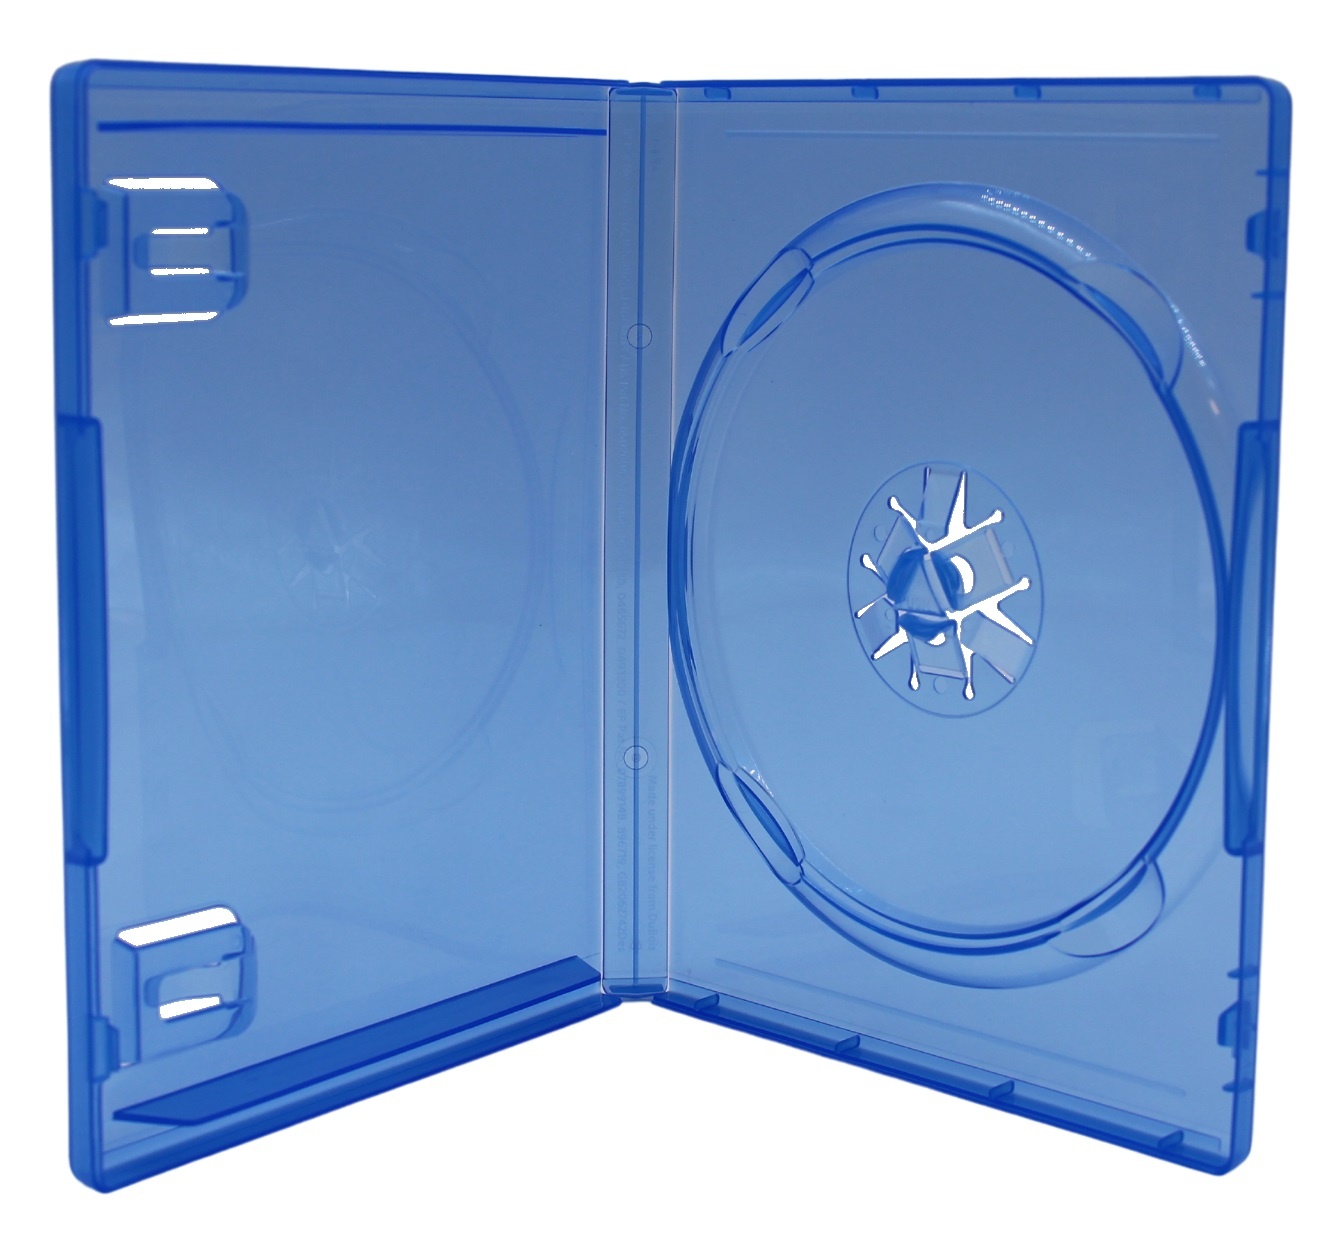 PlayStation hoes kopen - officiële blauwe cases | PS4 & PS5 - GameResource